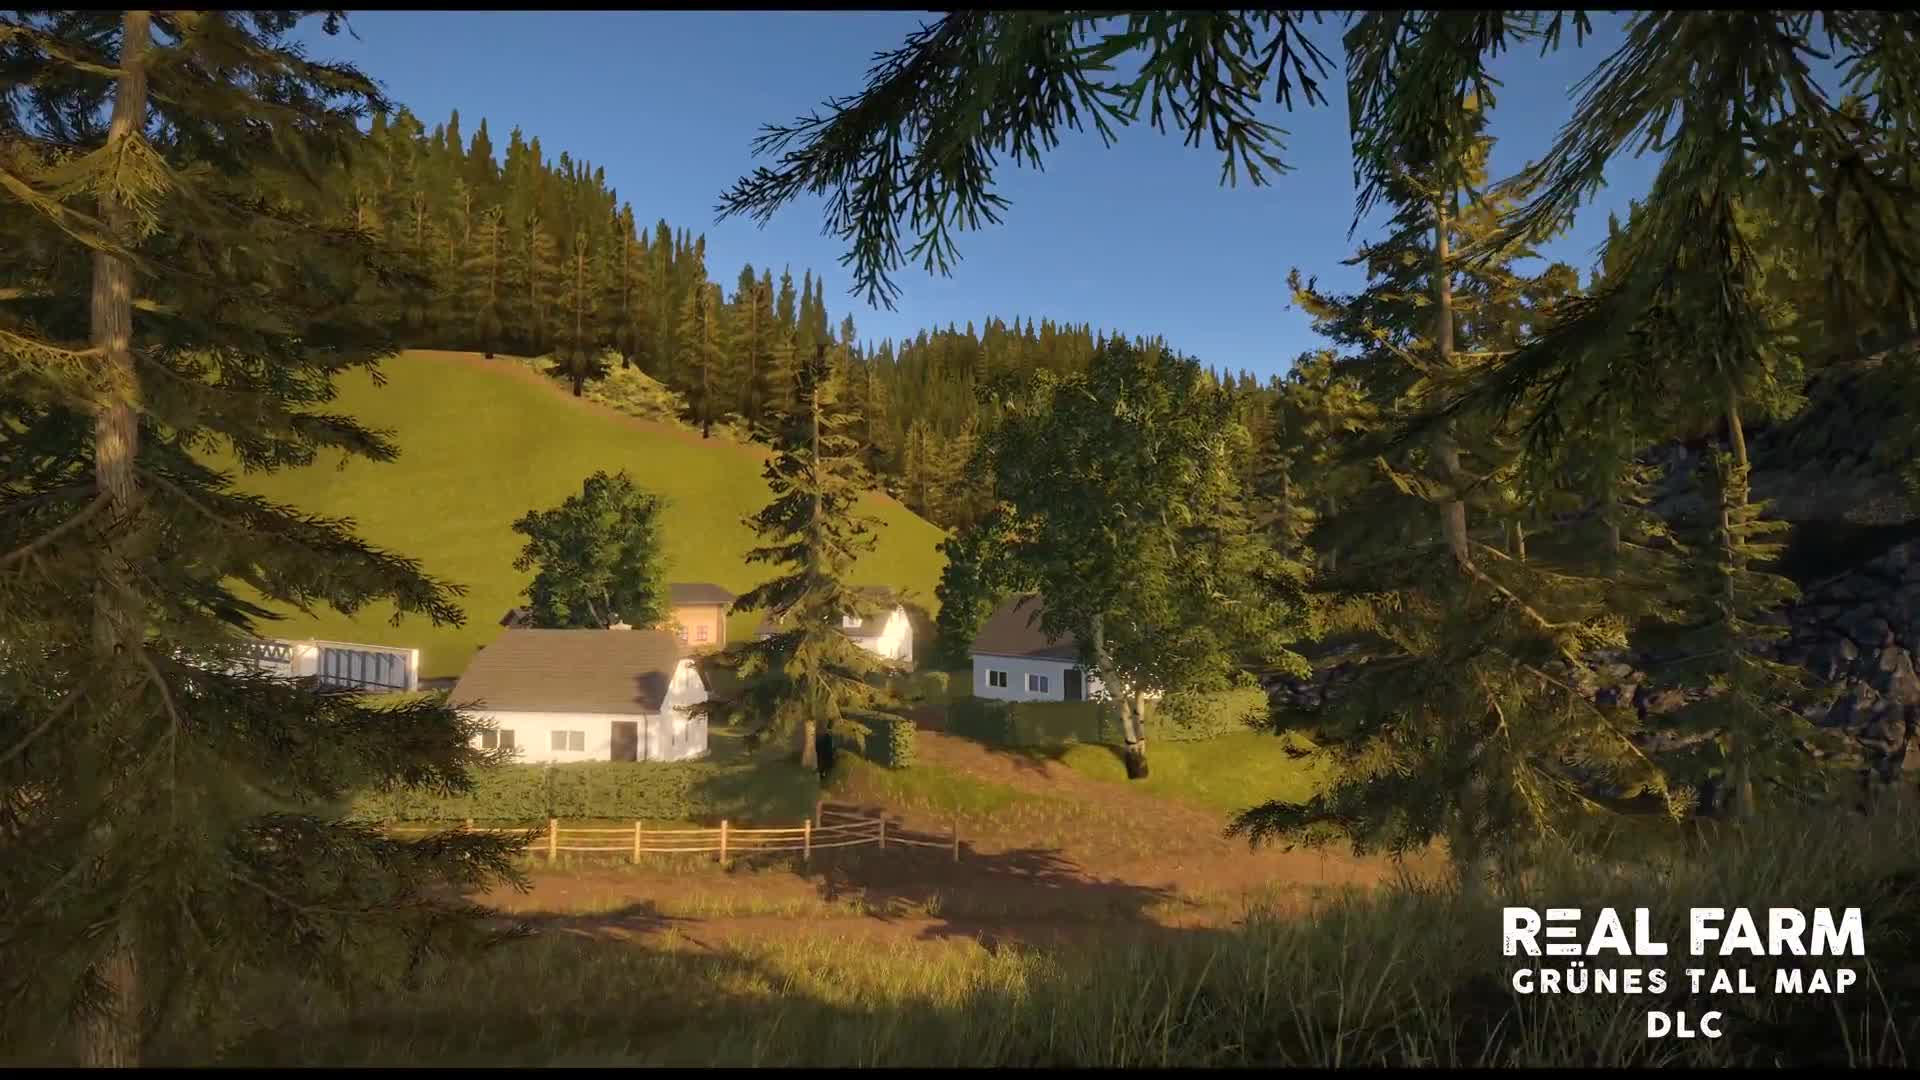 Real Farm - DLC trailer